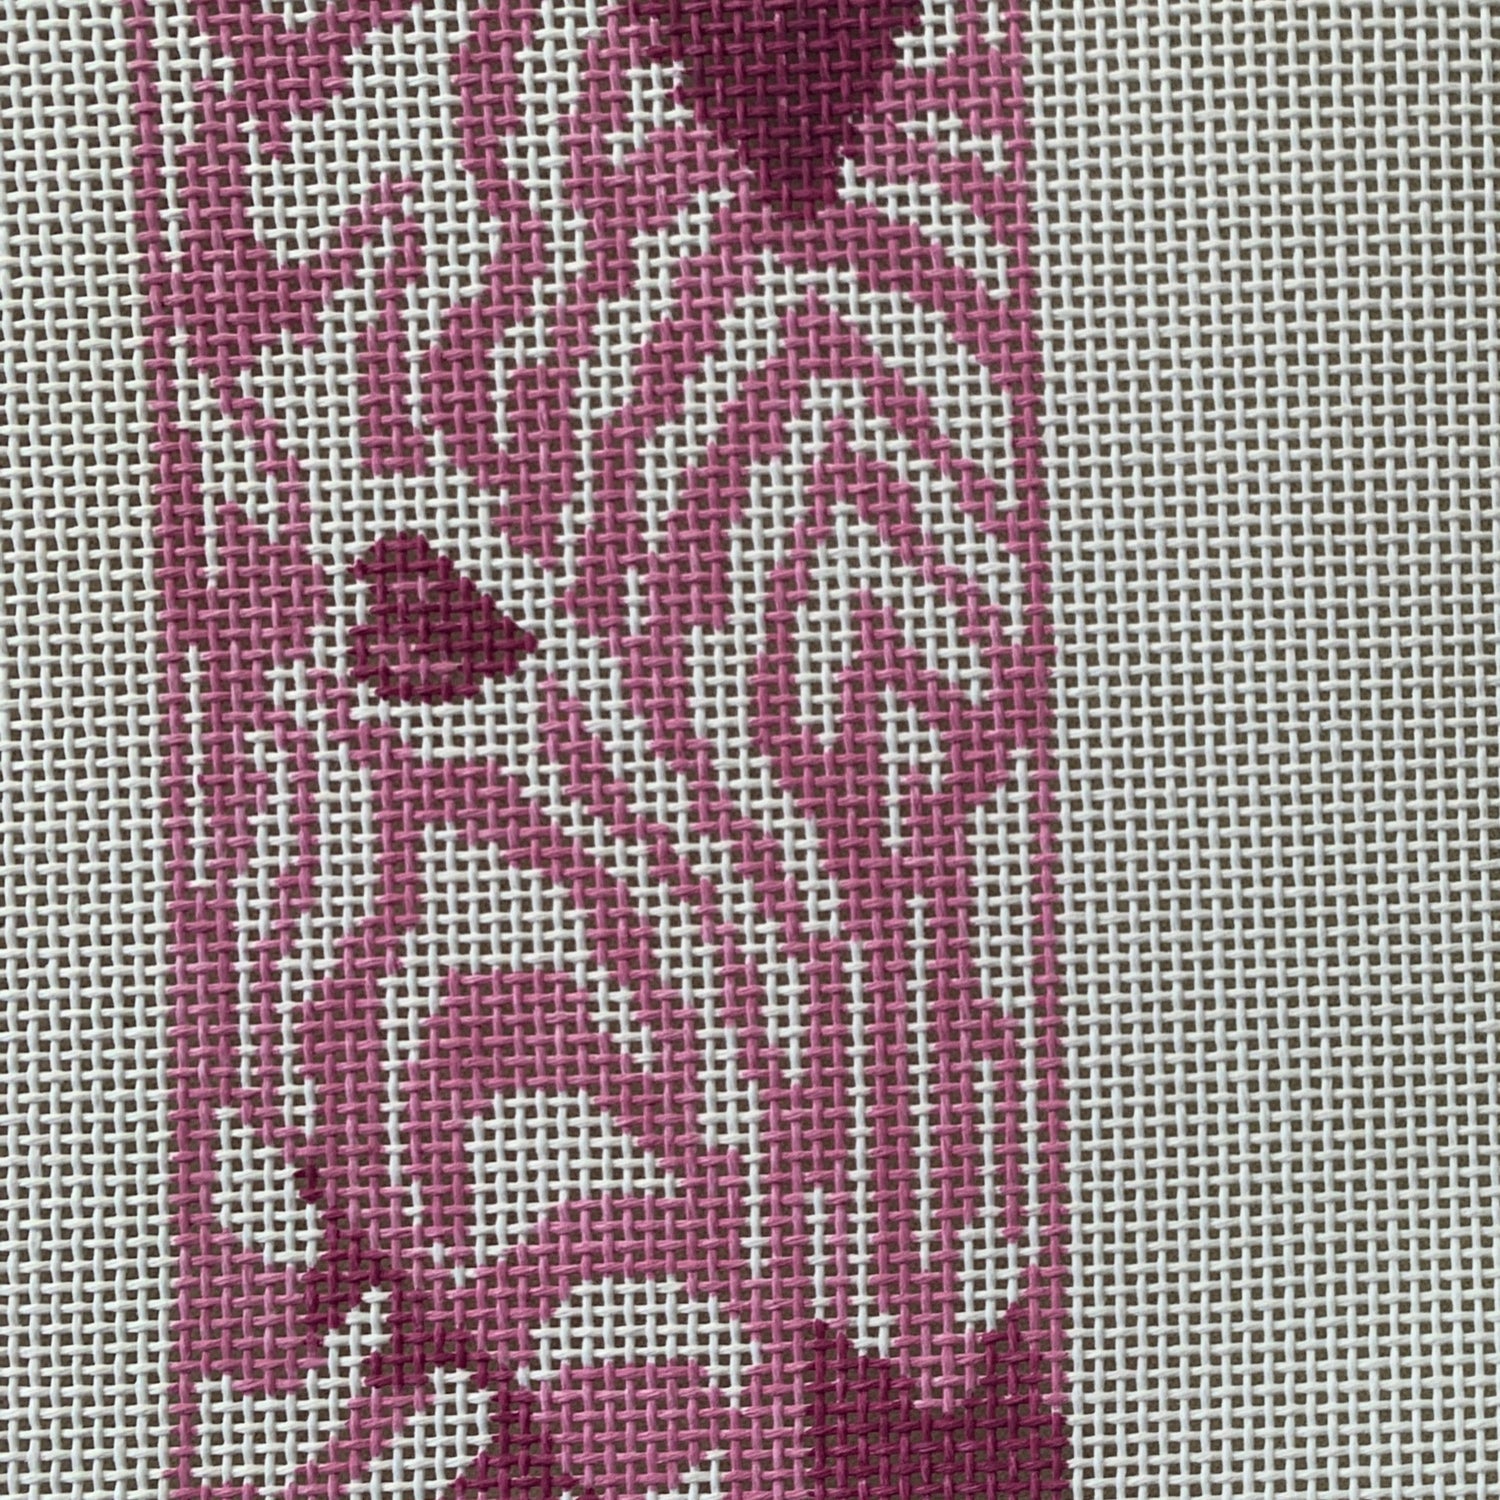 Eyeglass Case Pink Zebra (2) Needlecraft Canvas